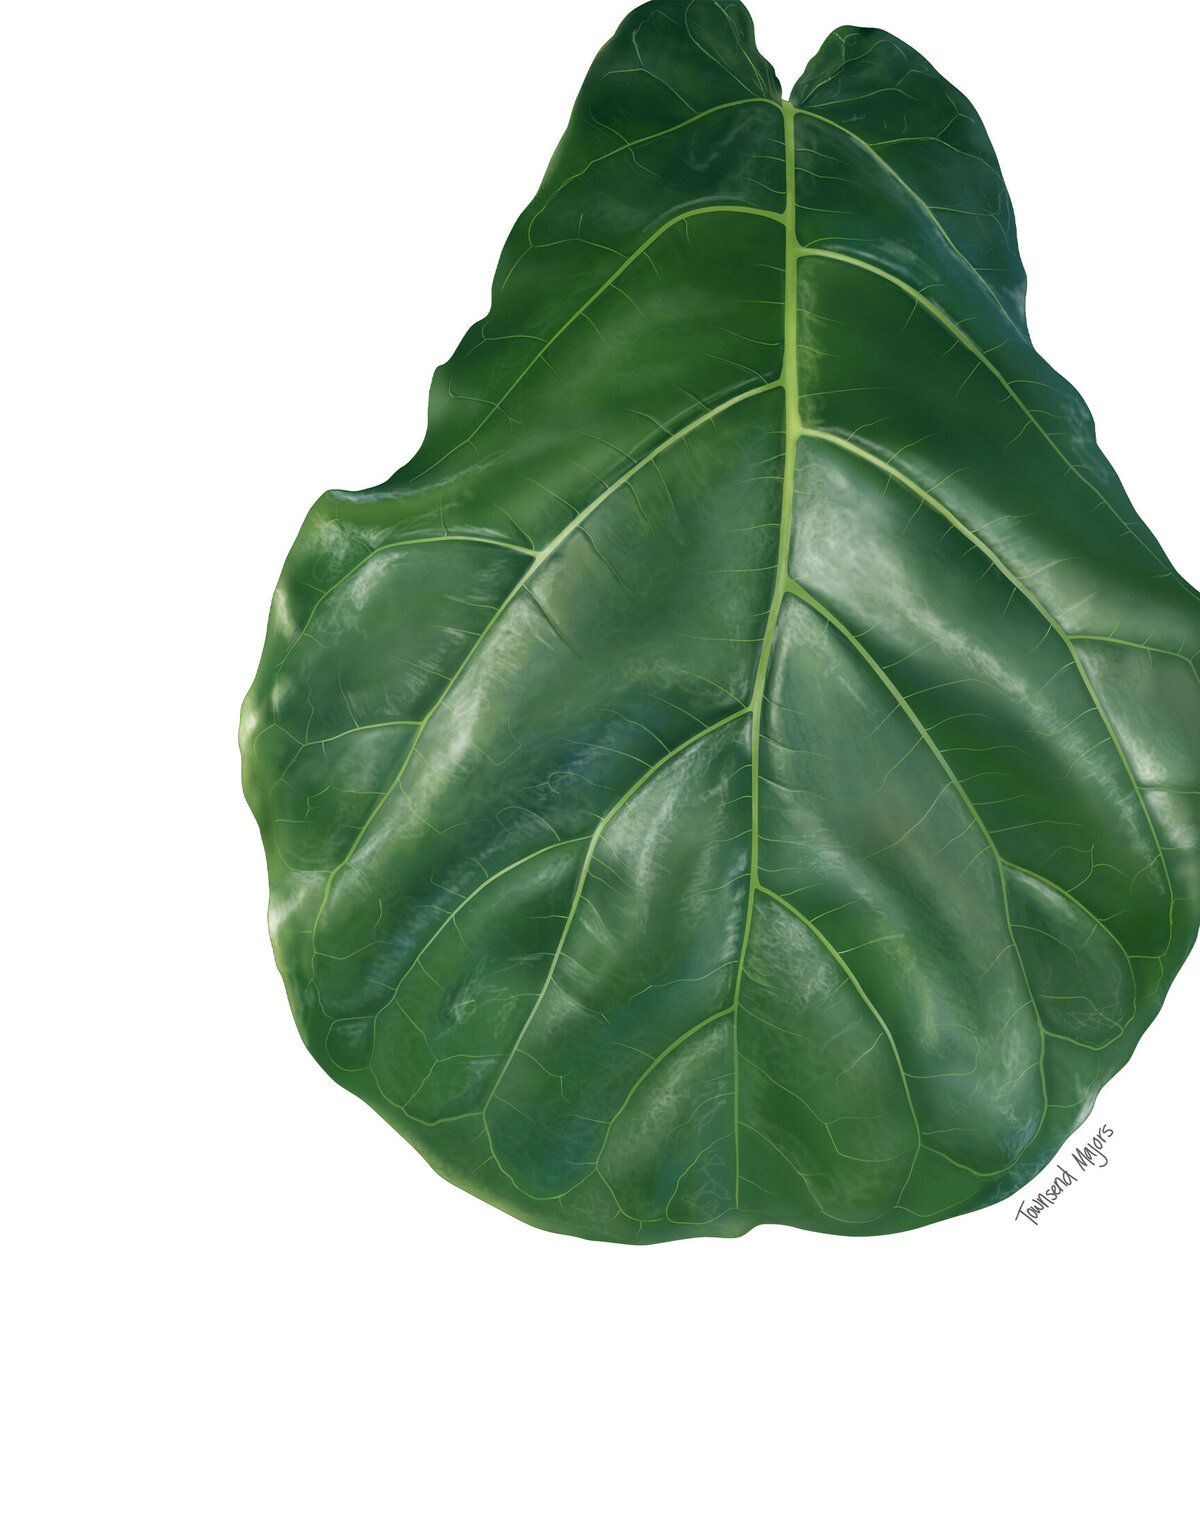 Townsend Majors' illustration of a fiddle leaf fig plant